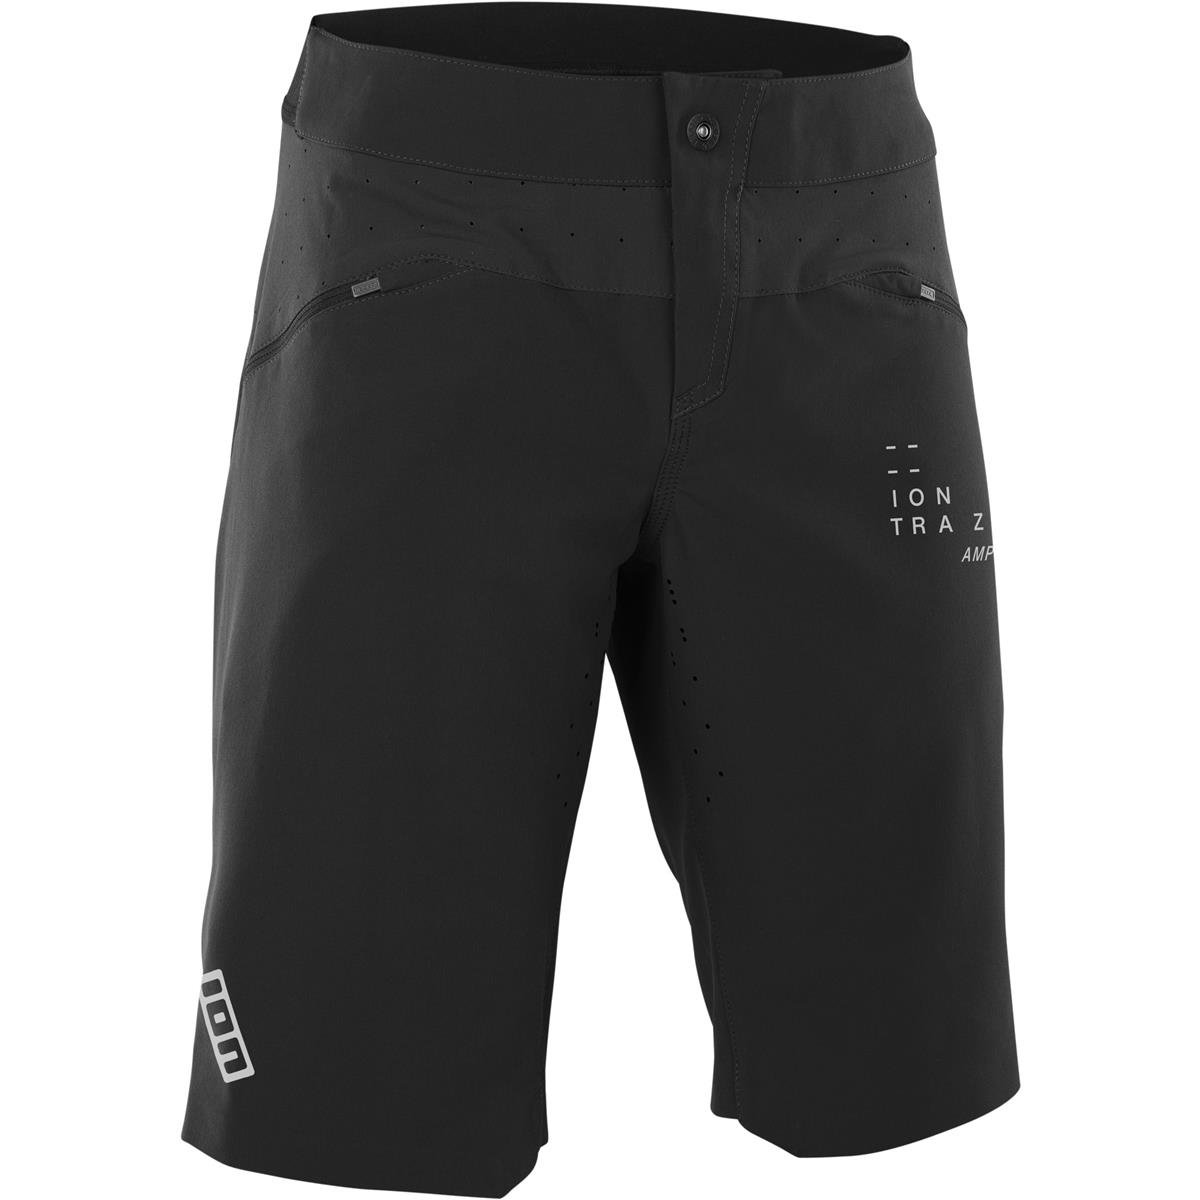 ION MTB Shorts Traze Amp AFT Black